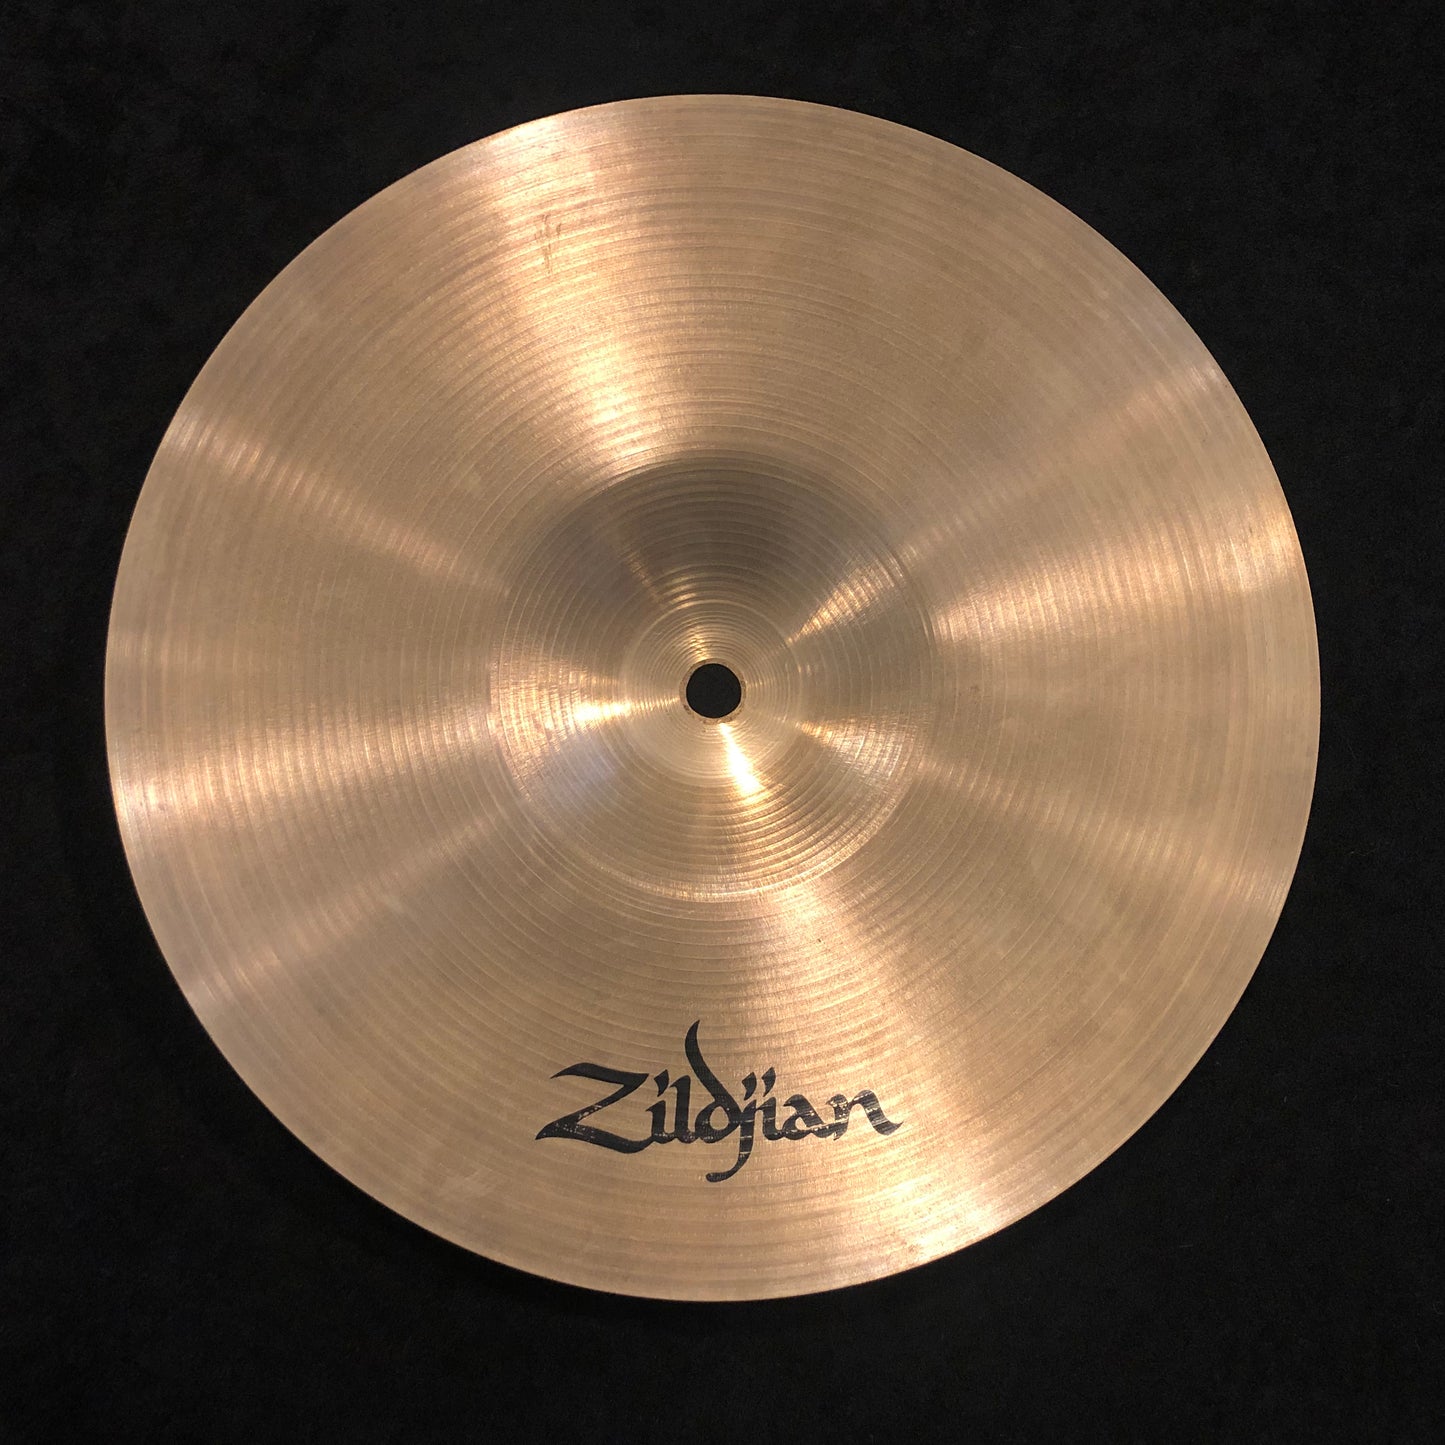 10" Zildjian A 1980s Splash Cymbal 234g